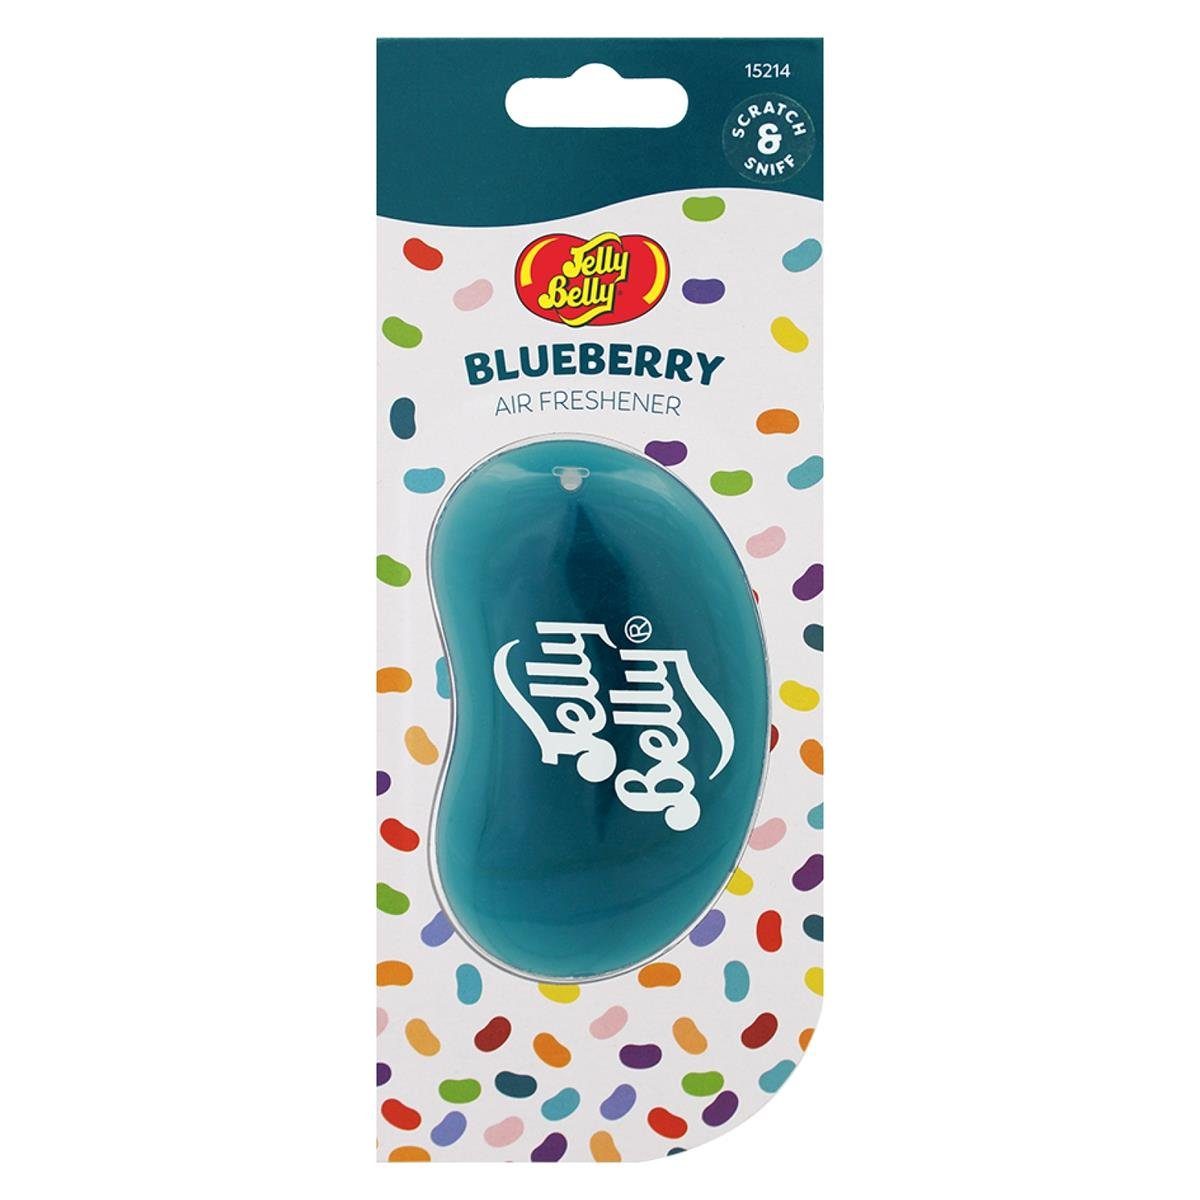 Auto-Lufterfrischer Blueberry Jelly Pack) Jelly Belly 15214MTS (1er Belly 18g Raumduft